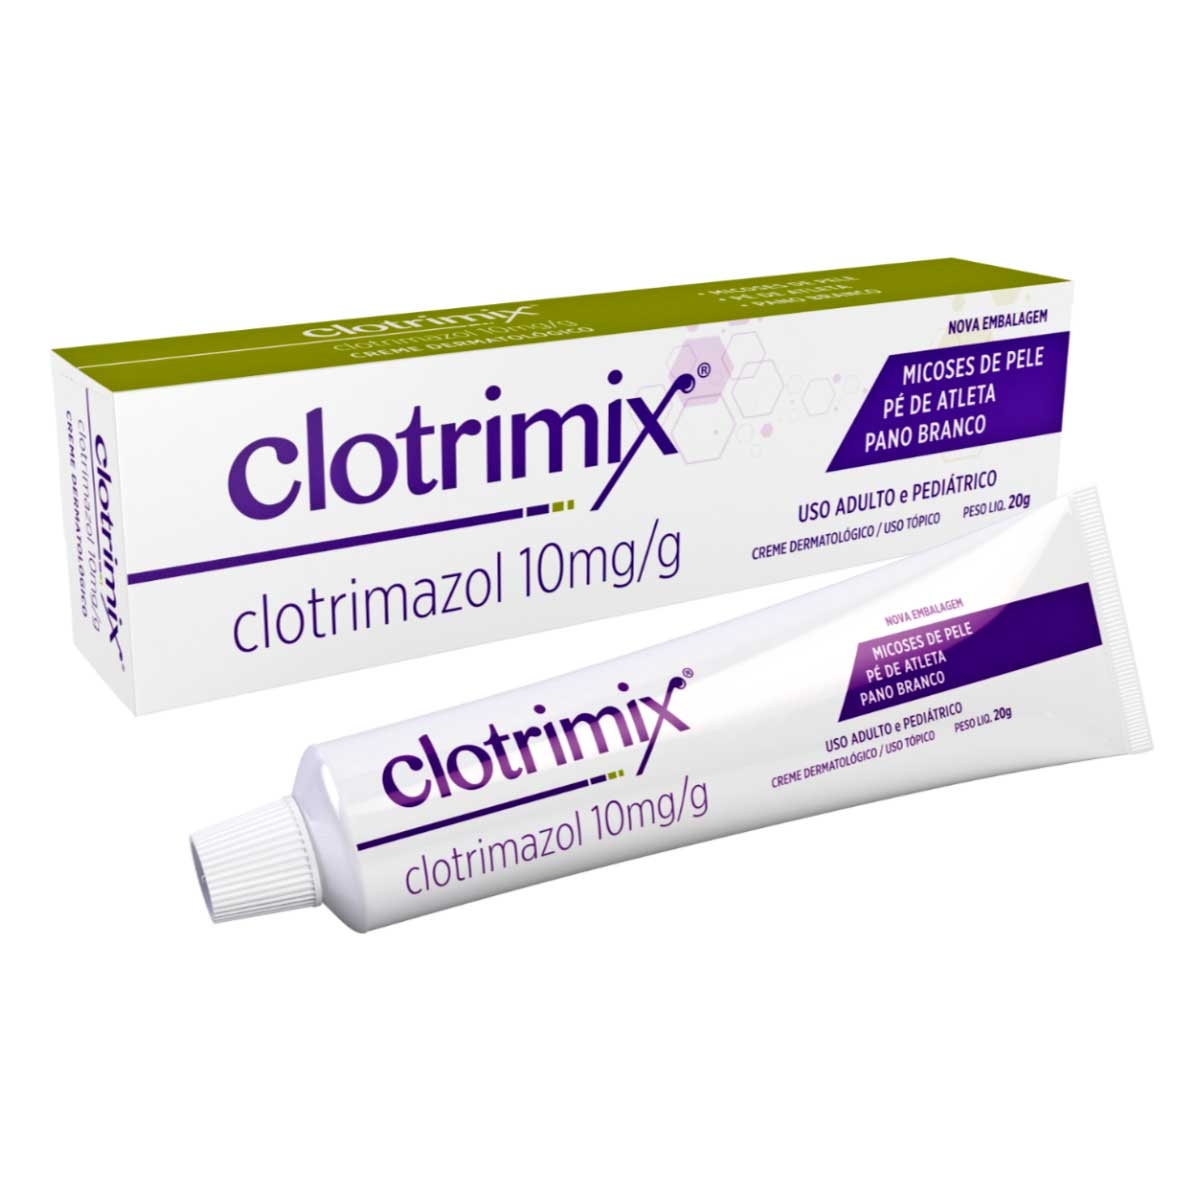 Clotrimix Clotrimazol 10mg/g Creme Dermatológico 20g